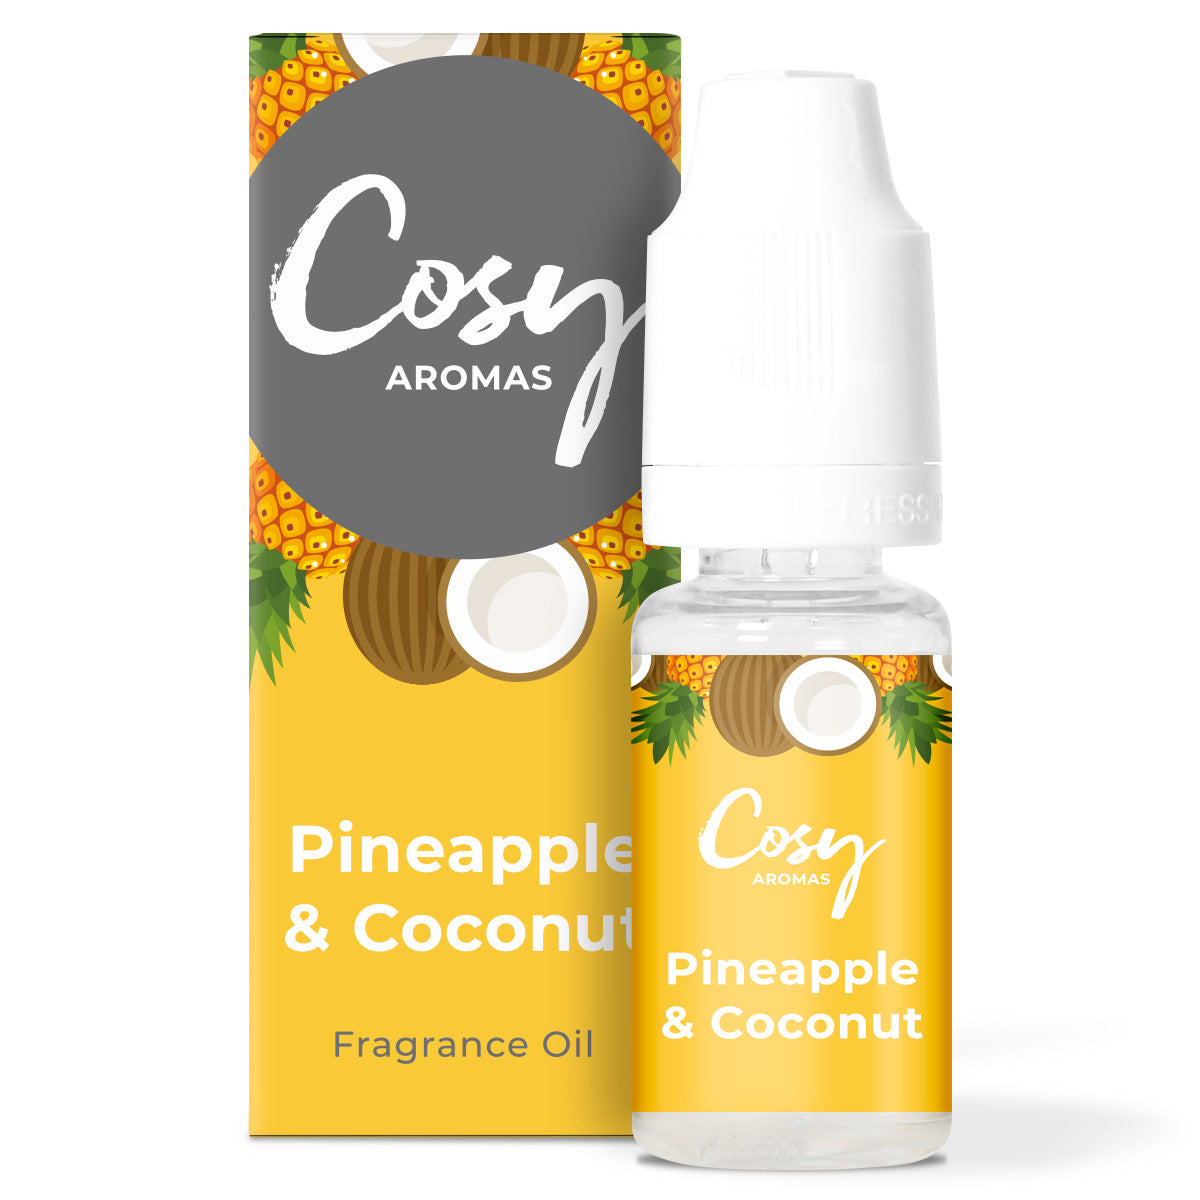 Pineapple & Coconut Fragrance Oil.